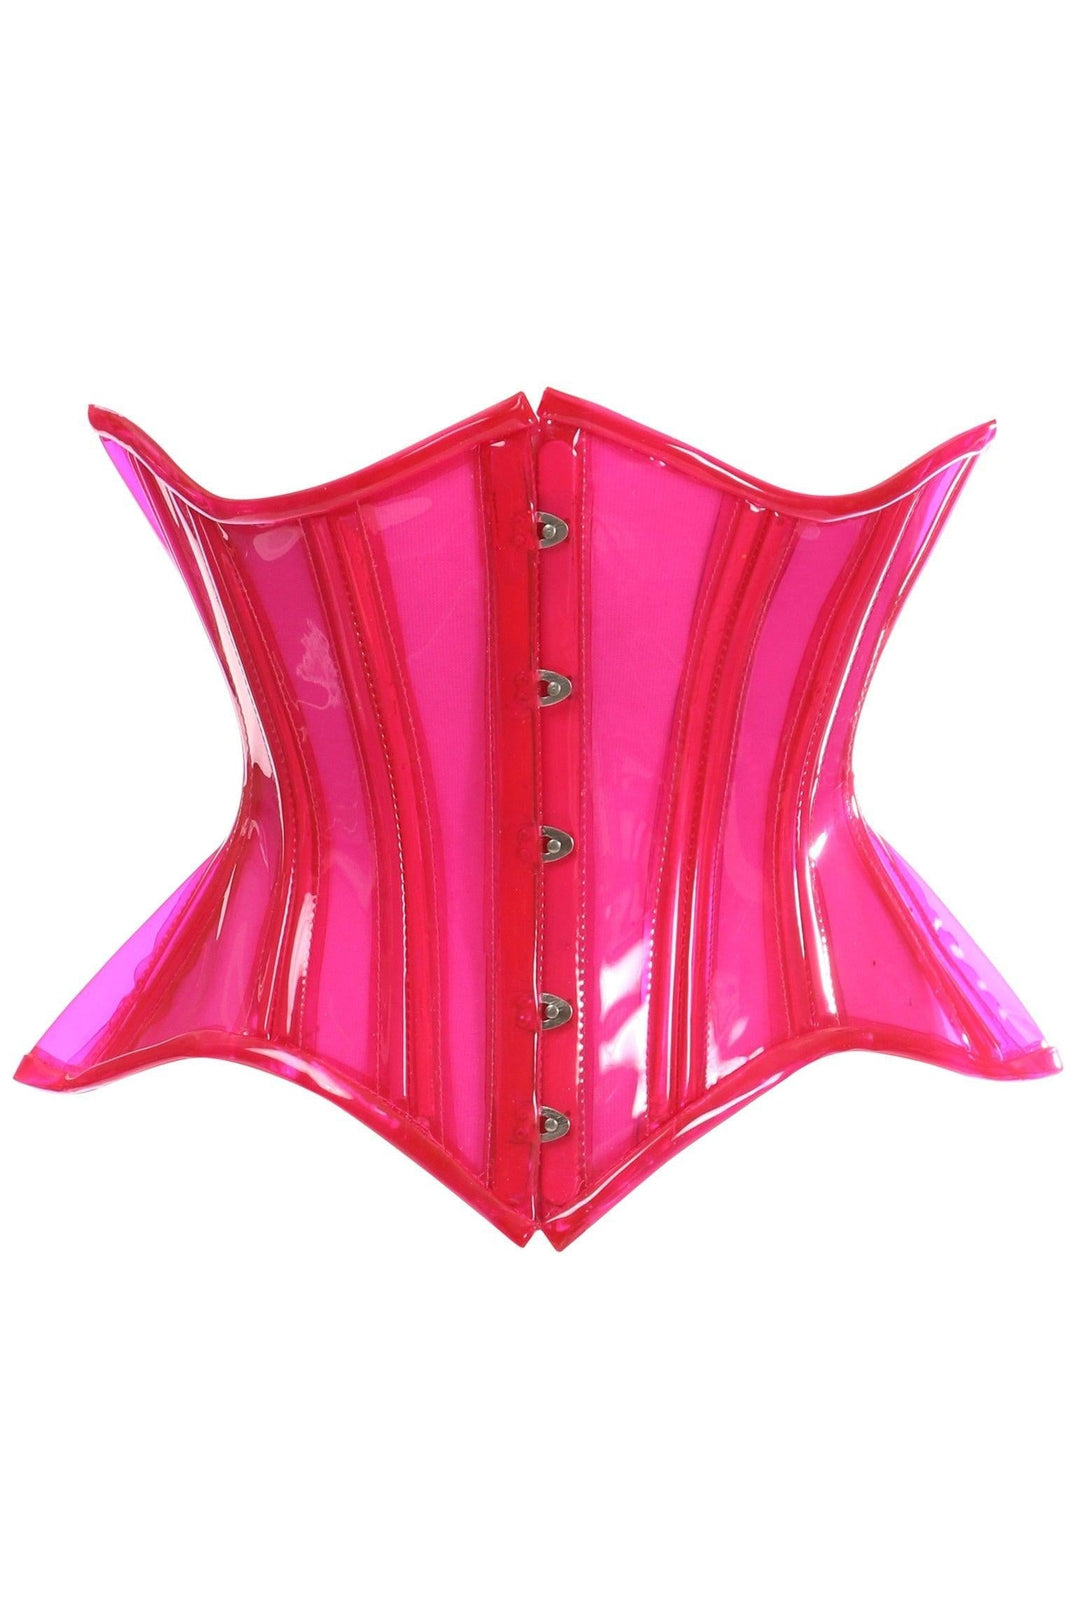 Pink Clear Curvy Underbust Waist Cincher Corset-Waist Cincher-Daisy Corsets-Pink-2X-SEXYSHOES.COM